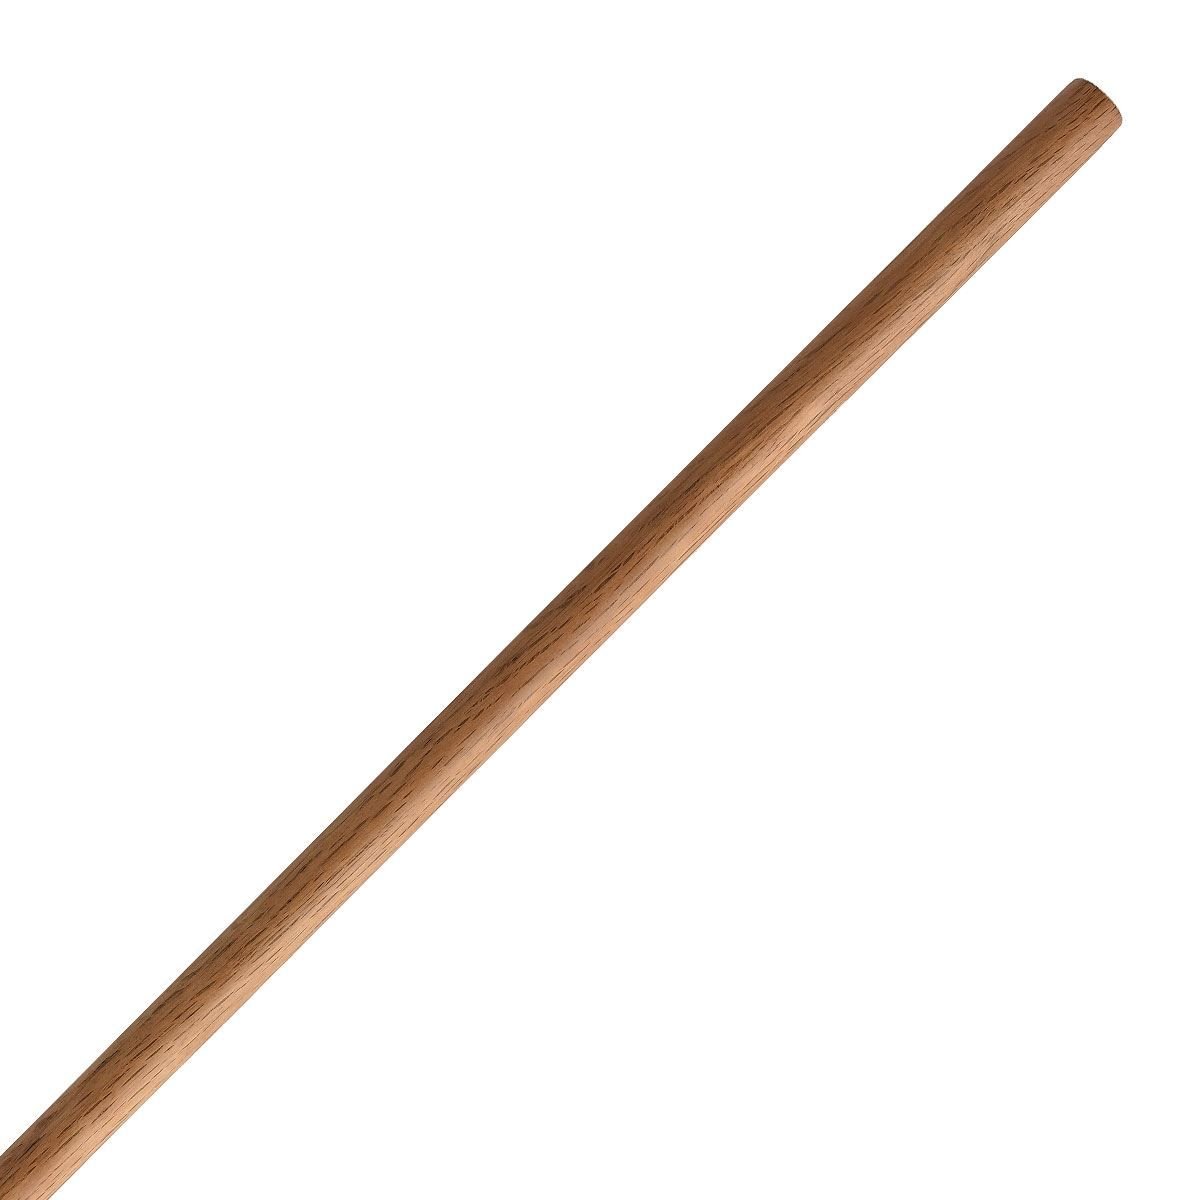 A wooden stick. Припой Castolin 5280 2%. Палка деревянная. Деревянная палка прямая. Деревянная палка без фона.